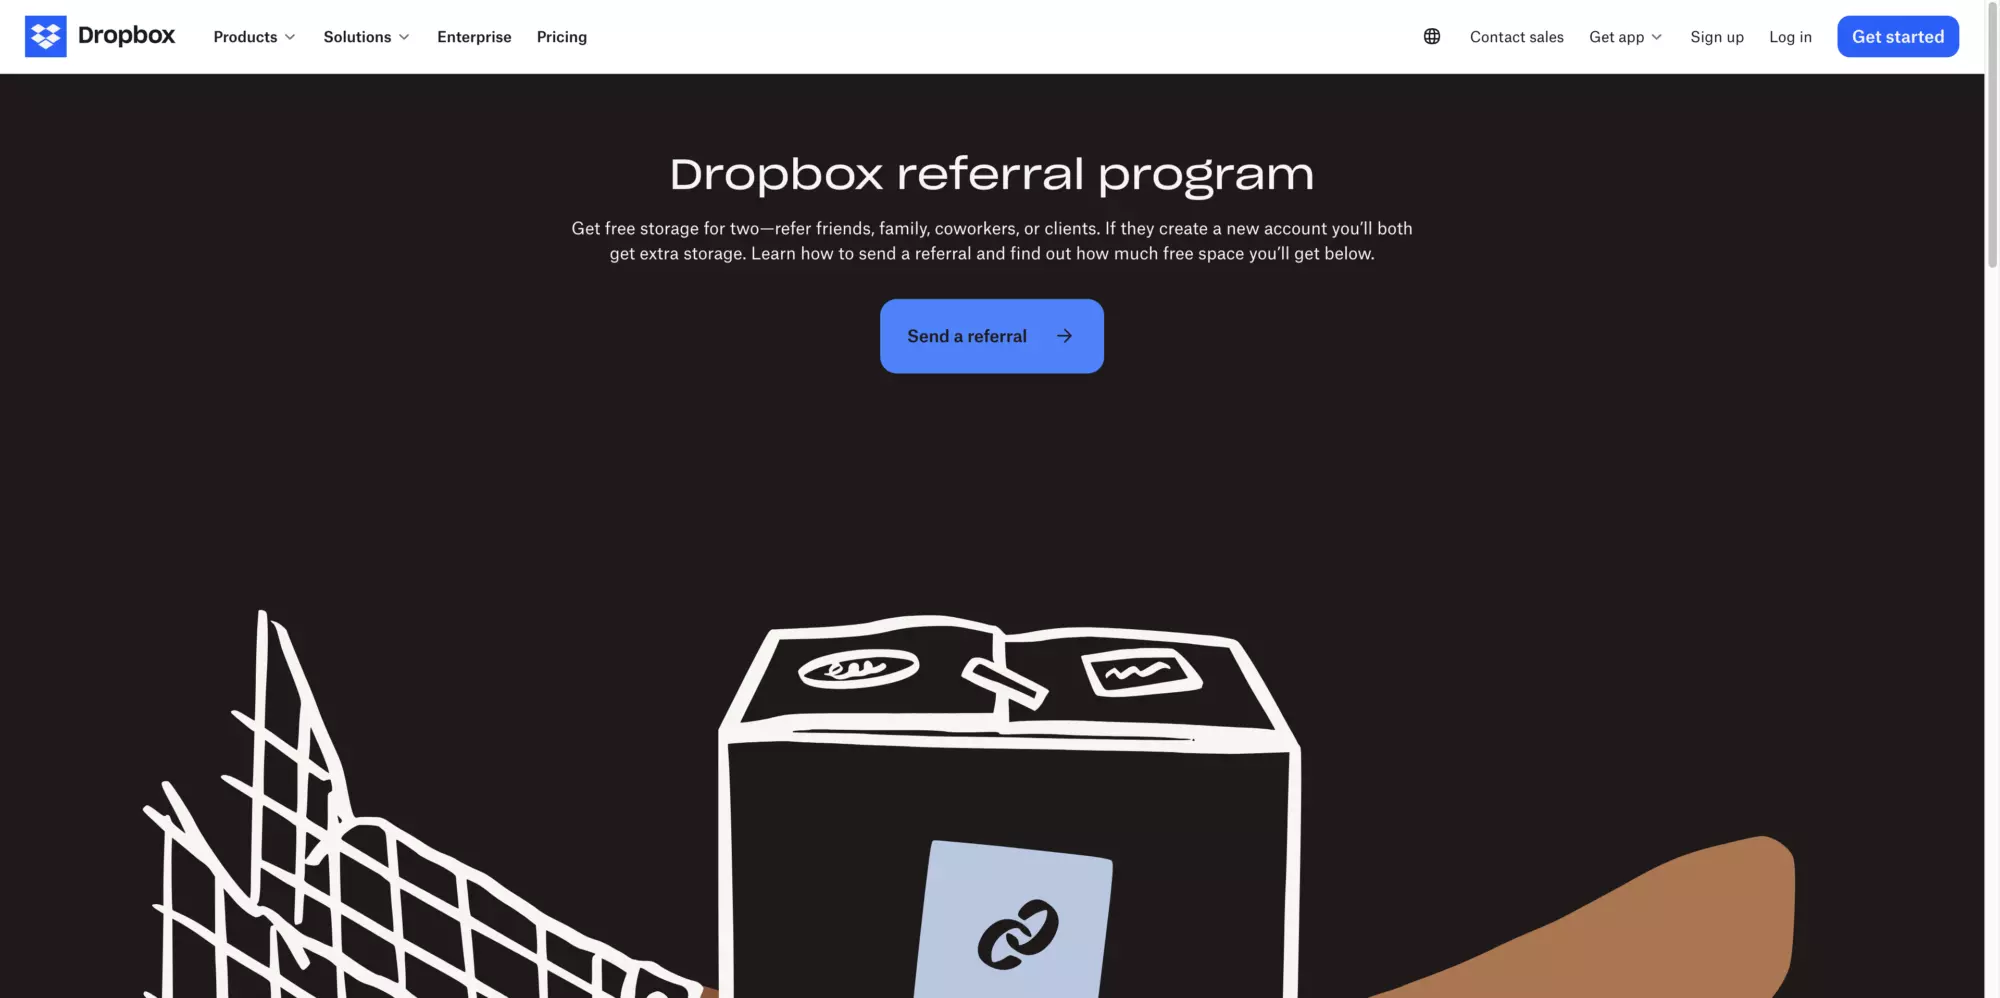 Dropbox's referral program